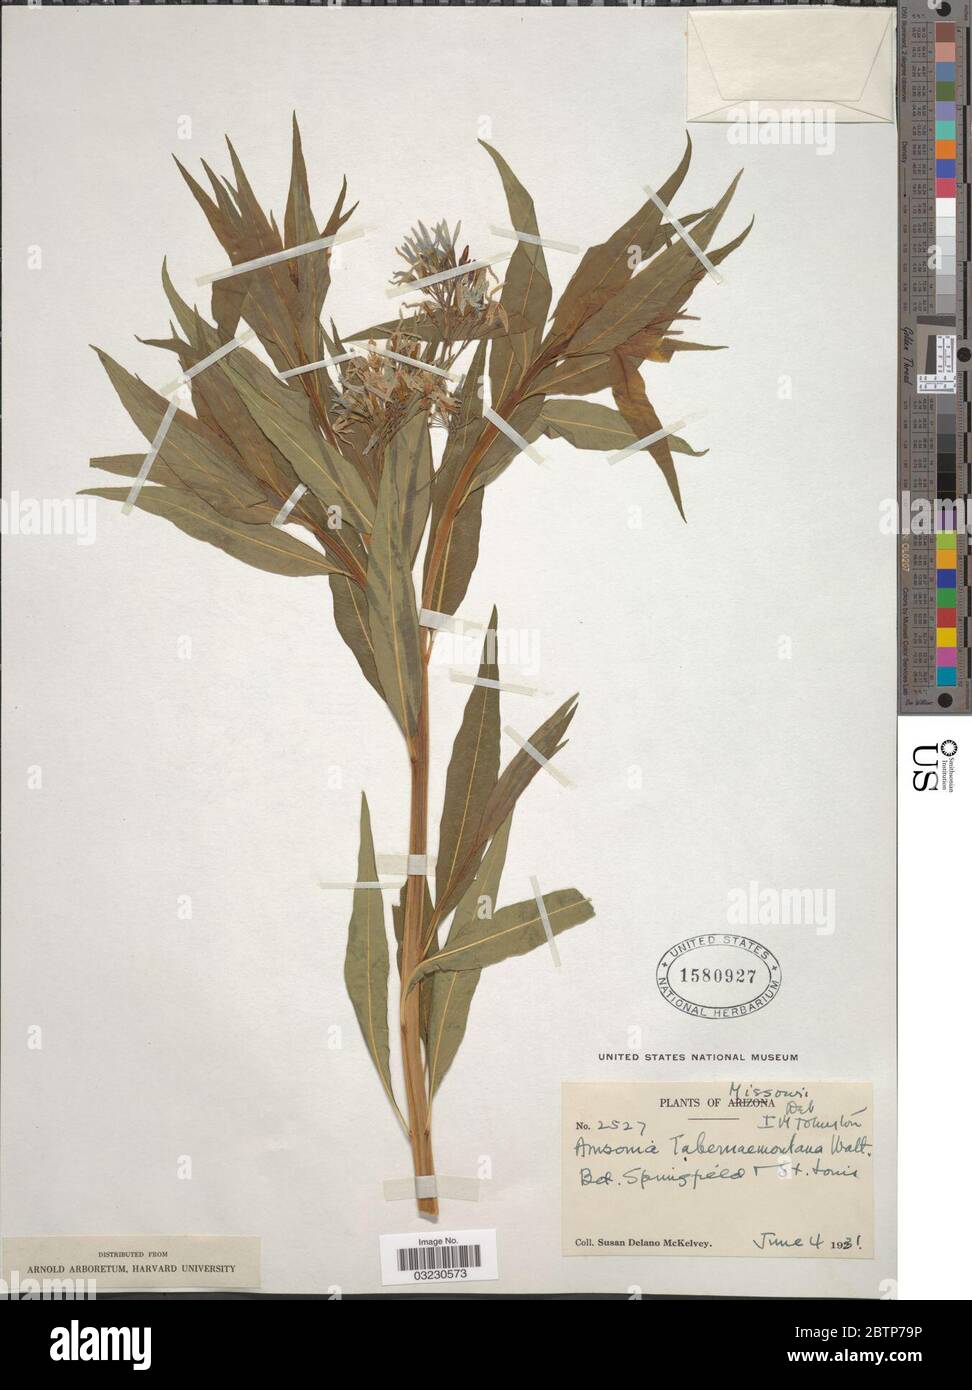 Amsonia tabernaemontana var salicifolia Pursh Woodson. Stock Photo